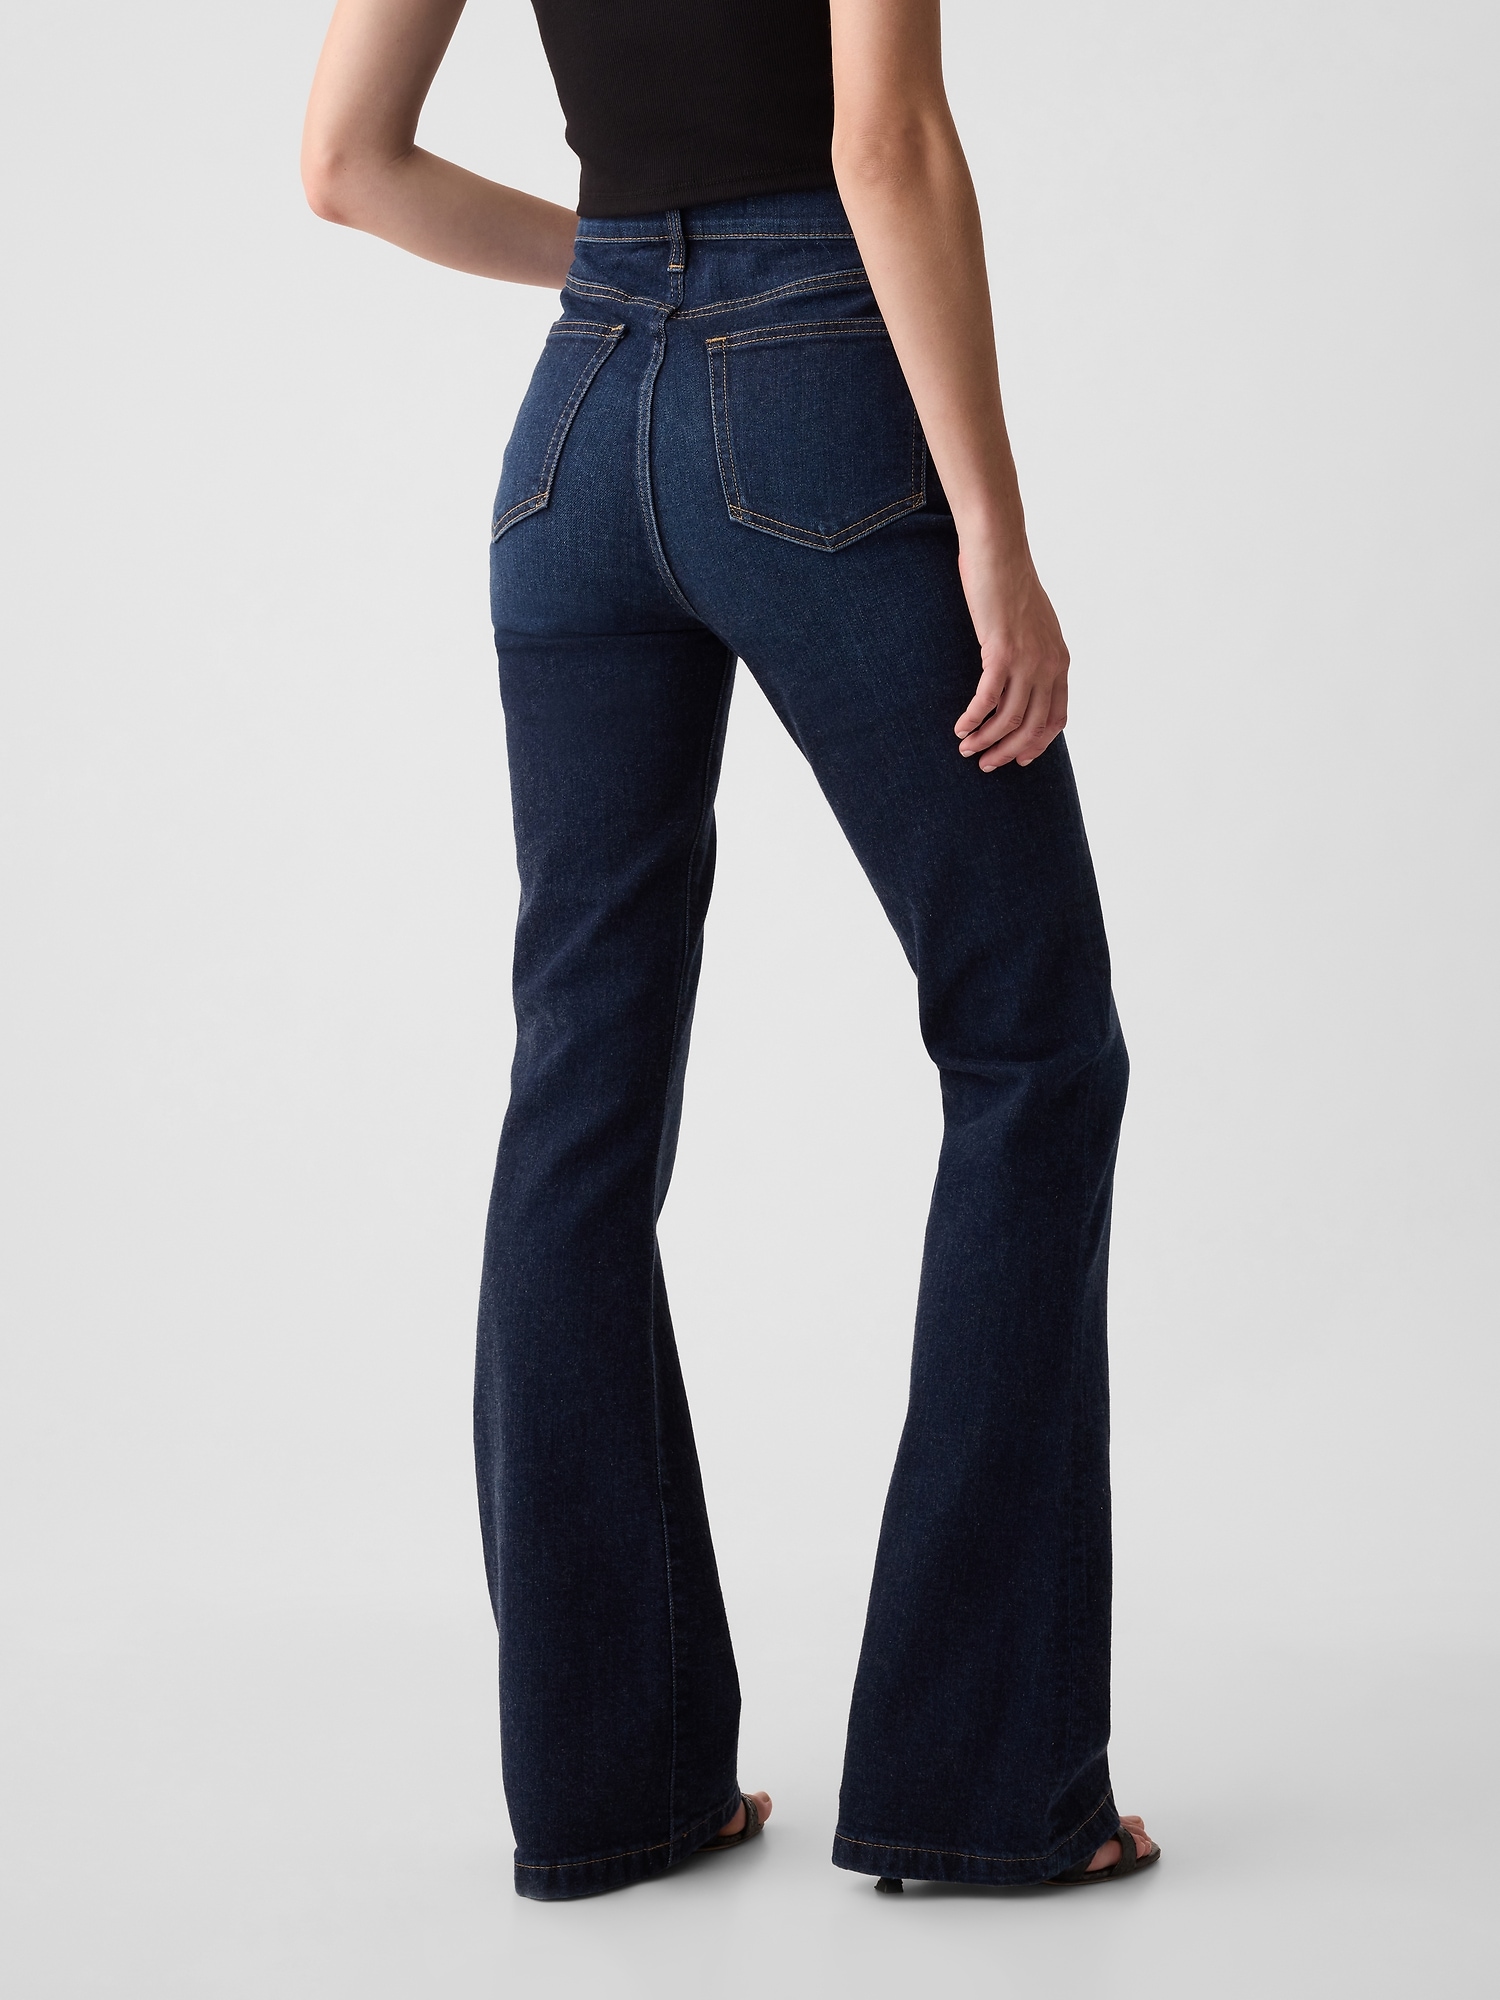 Women's Vintage 70s Flare Bottom Jeans Fashion Destroyed Flare